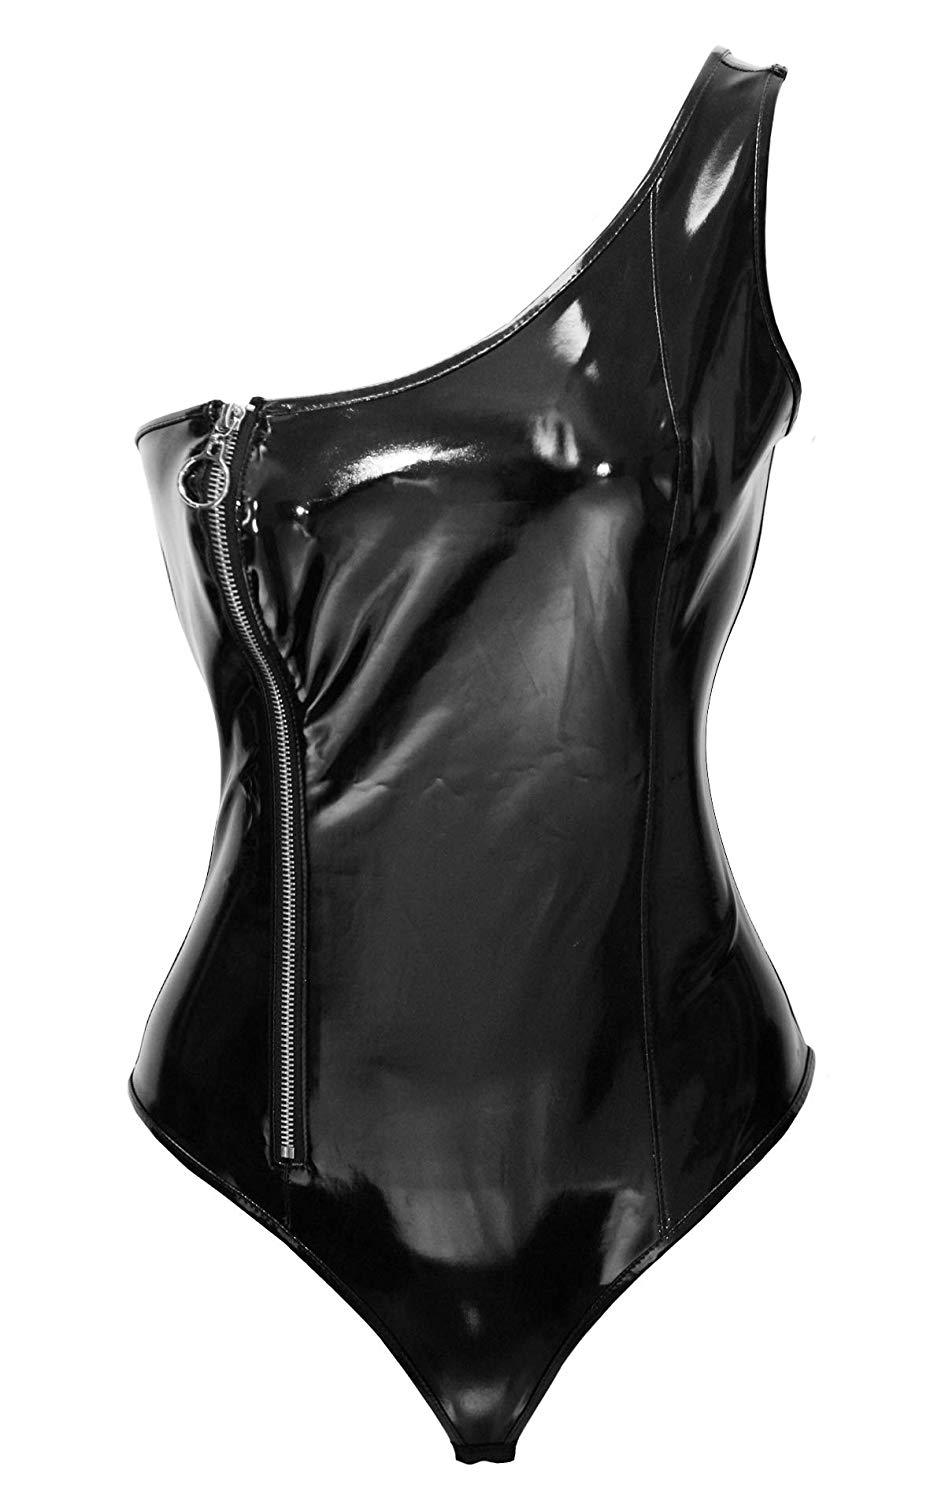 Body Pleasure - TL114 - Wet Look - One Size Fits Most - Luxury Gift Box - Black